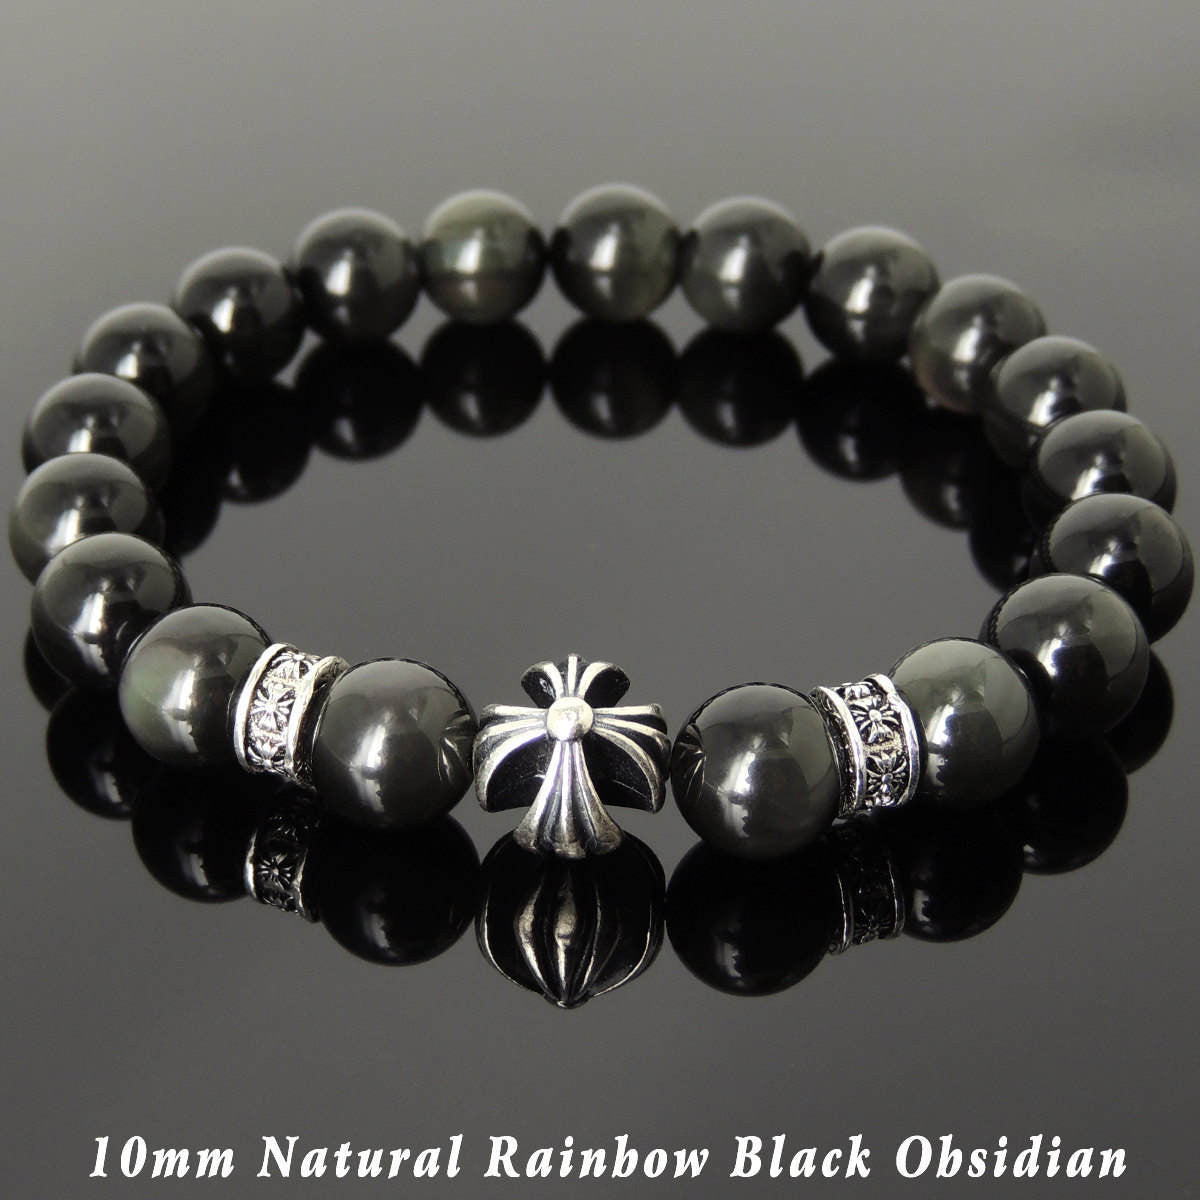 10mm Rainbow Black Obsidian Healing Gemstone Bracelet with S925 Sterling Silver Cross & Spacer Beads - Handmade by Gem & Silver BR1090